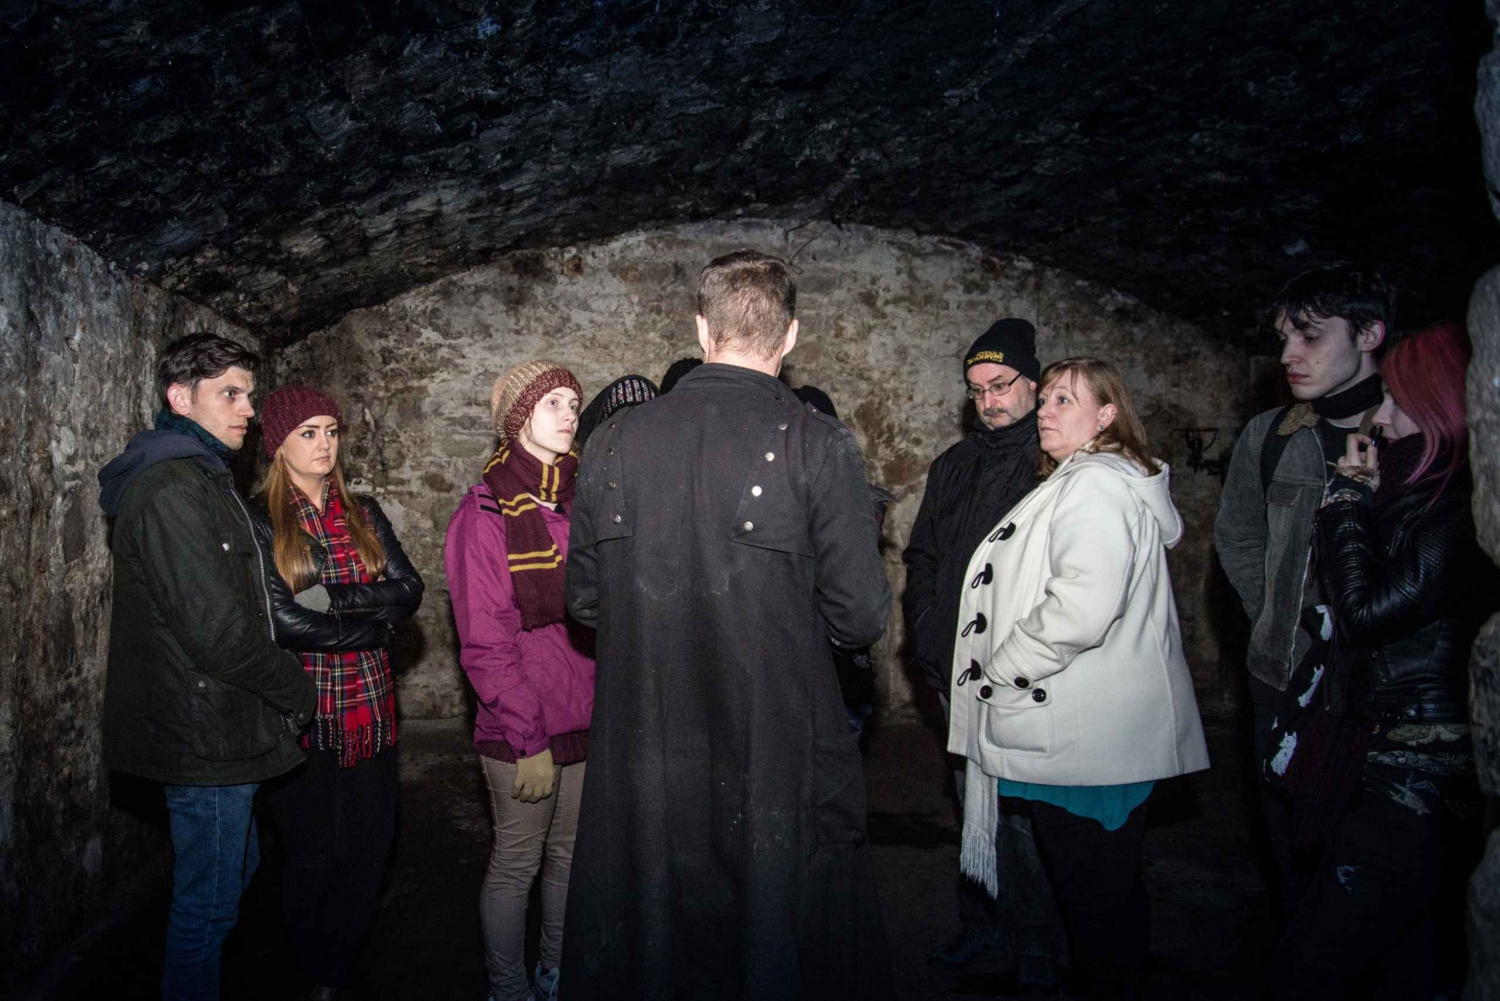 edinburgh haunted underground vaults and graveyard tour